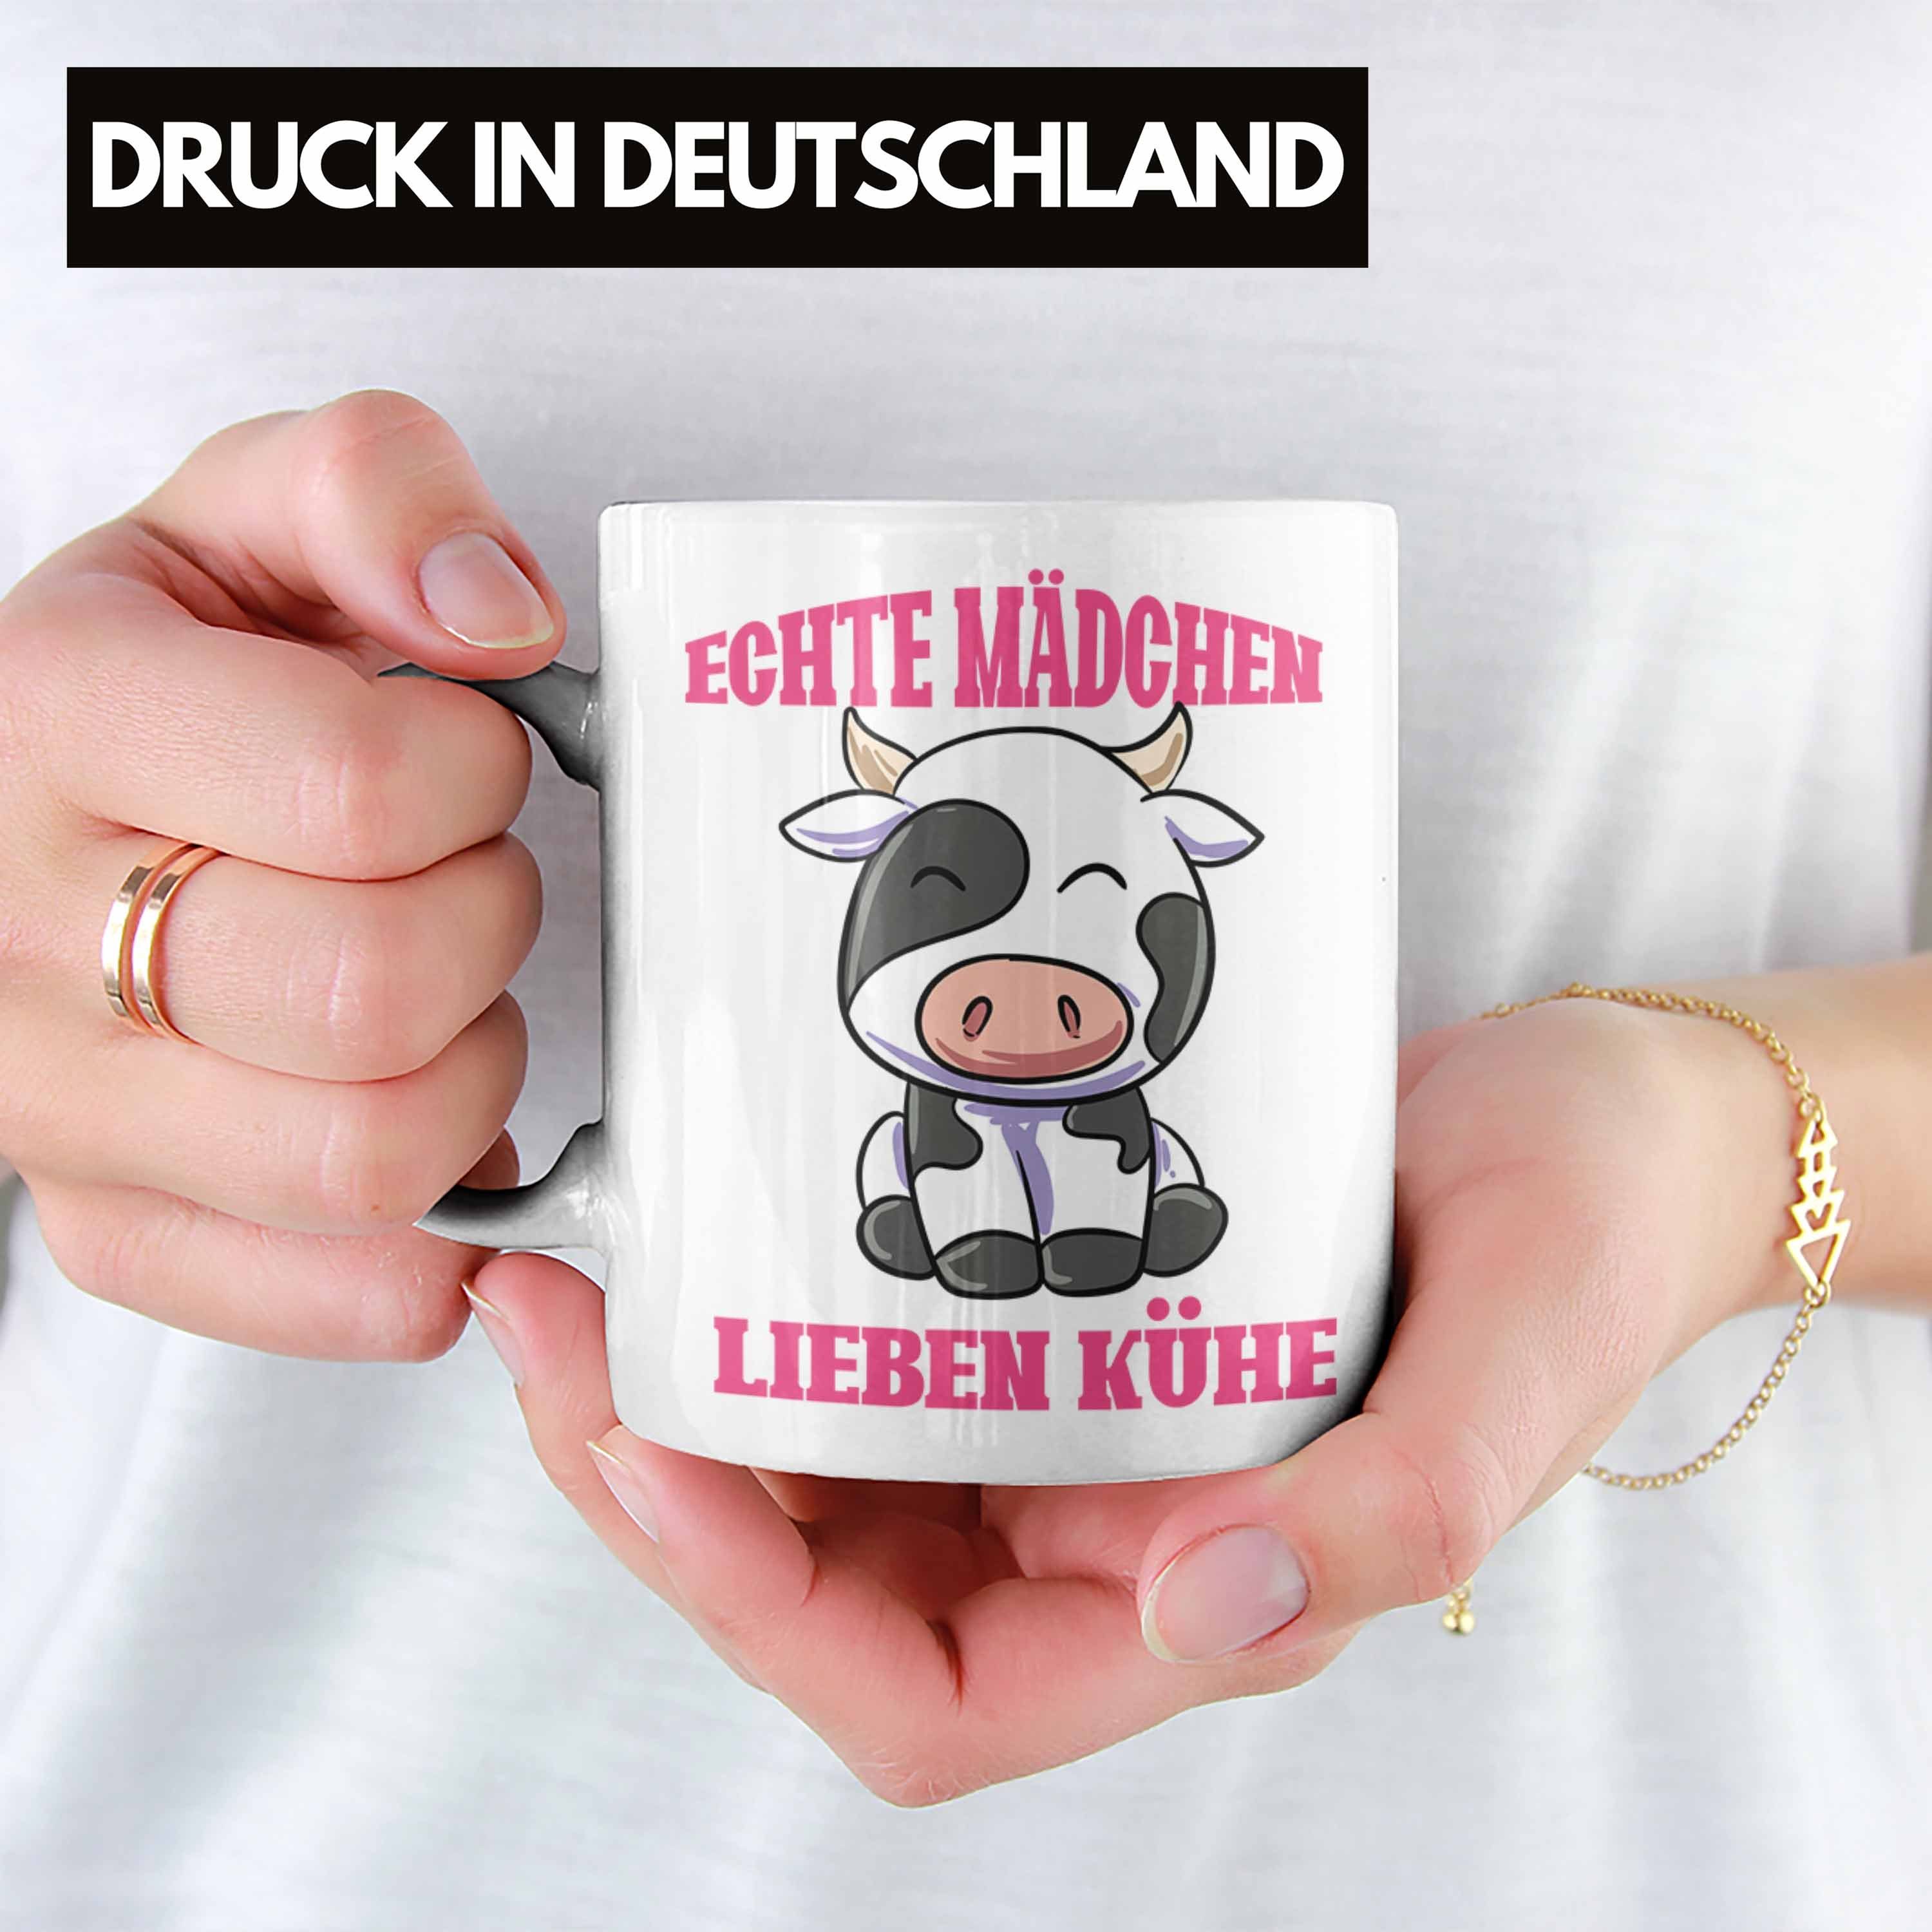 Tasse Mädchen Gesch Lieben Landwirtin Geschenk Echte Tasse Kühe Weiss Kuh Bäuerin Trendation